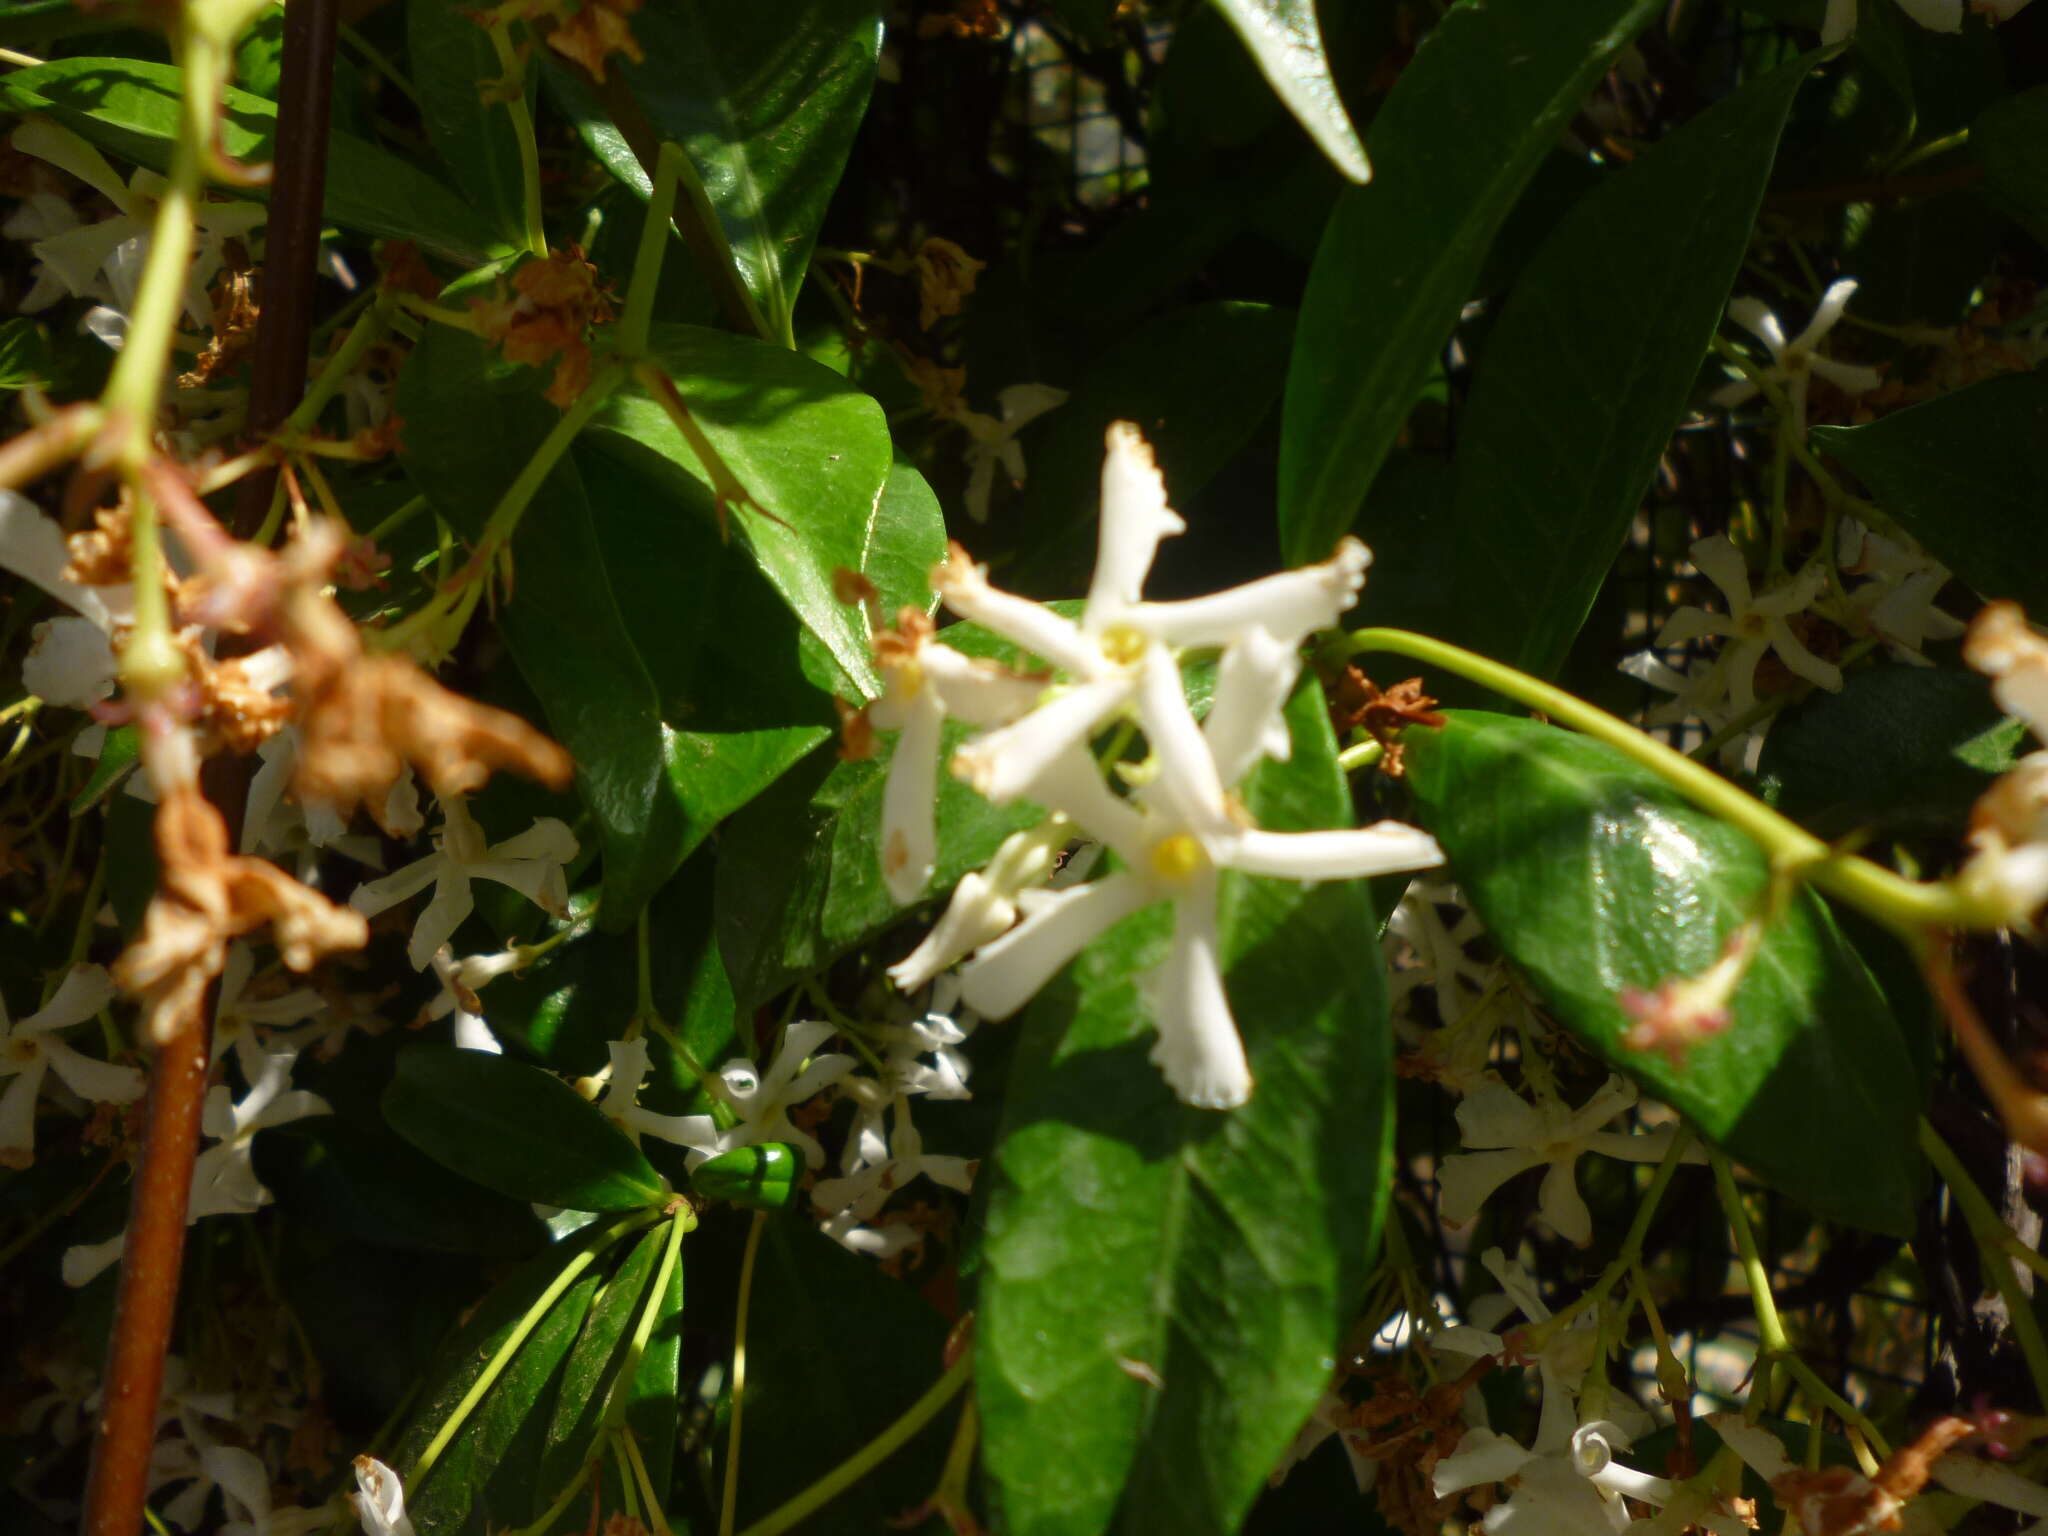 Image of Star-jasmine or Confederate-jasmine